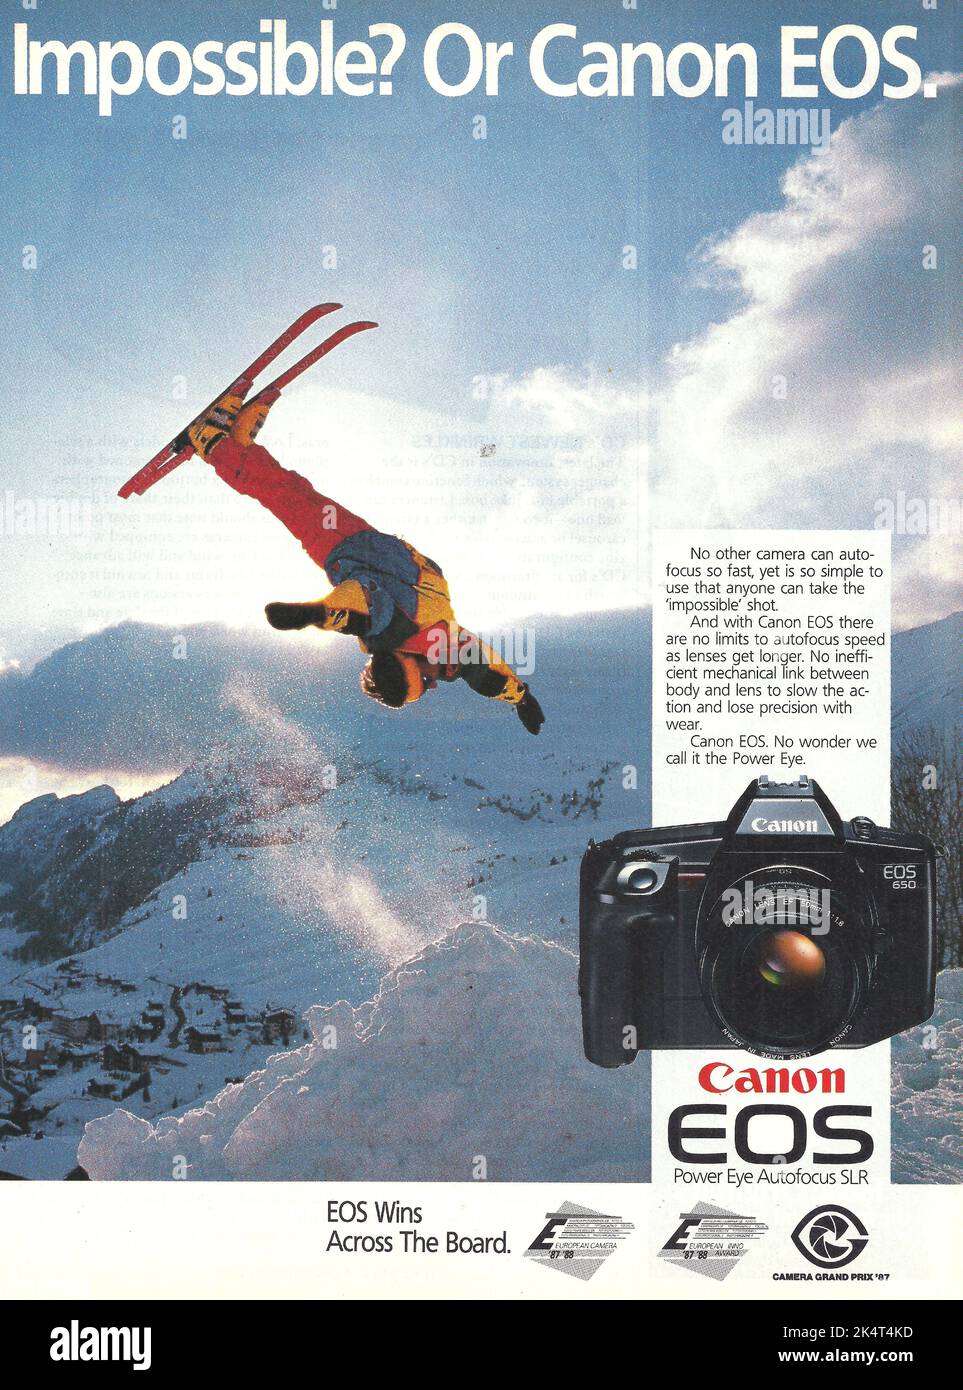 Canon camera Canon EOS camera vintage magazine advertisement paper advert 1980s 1970s Stock Photo